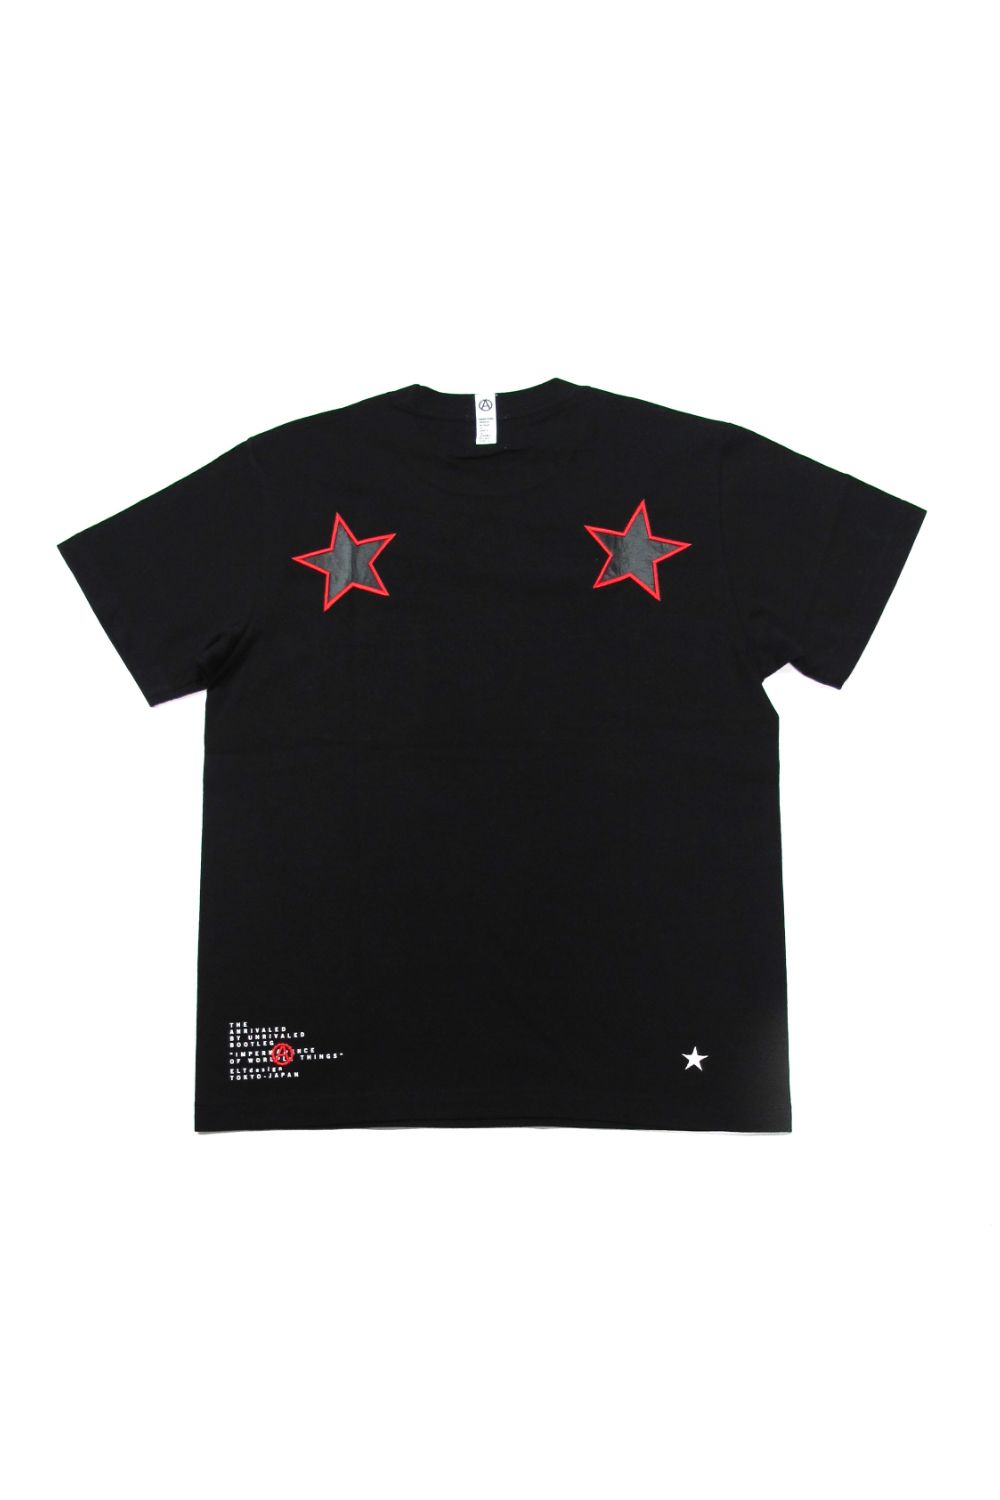 M&M CUSTOM PERFORMANCE UNRIVALED STAR TEE Tシャツ 星 スター ロゴ 